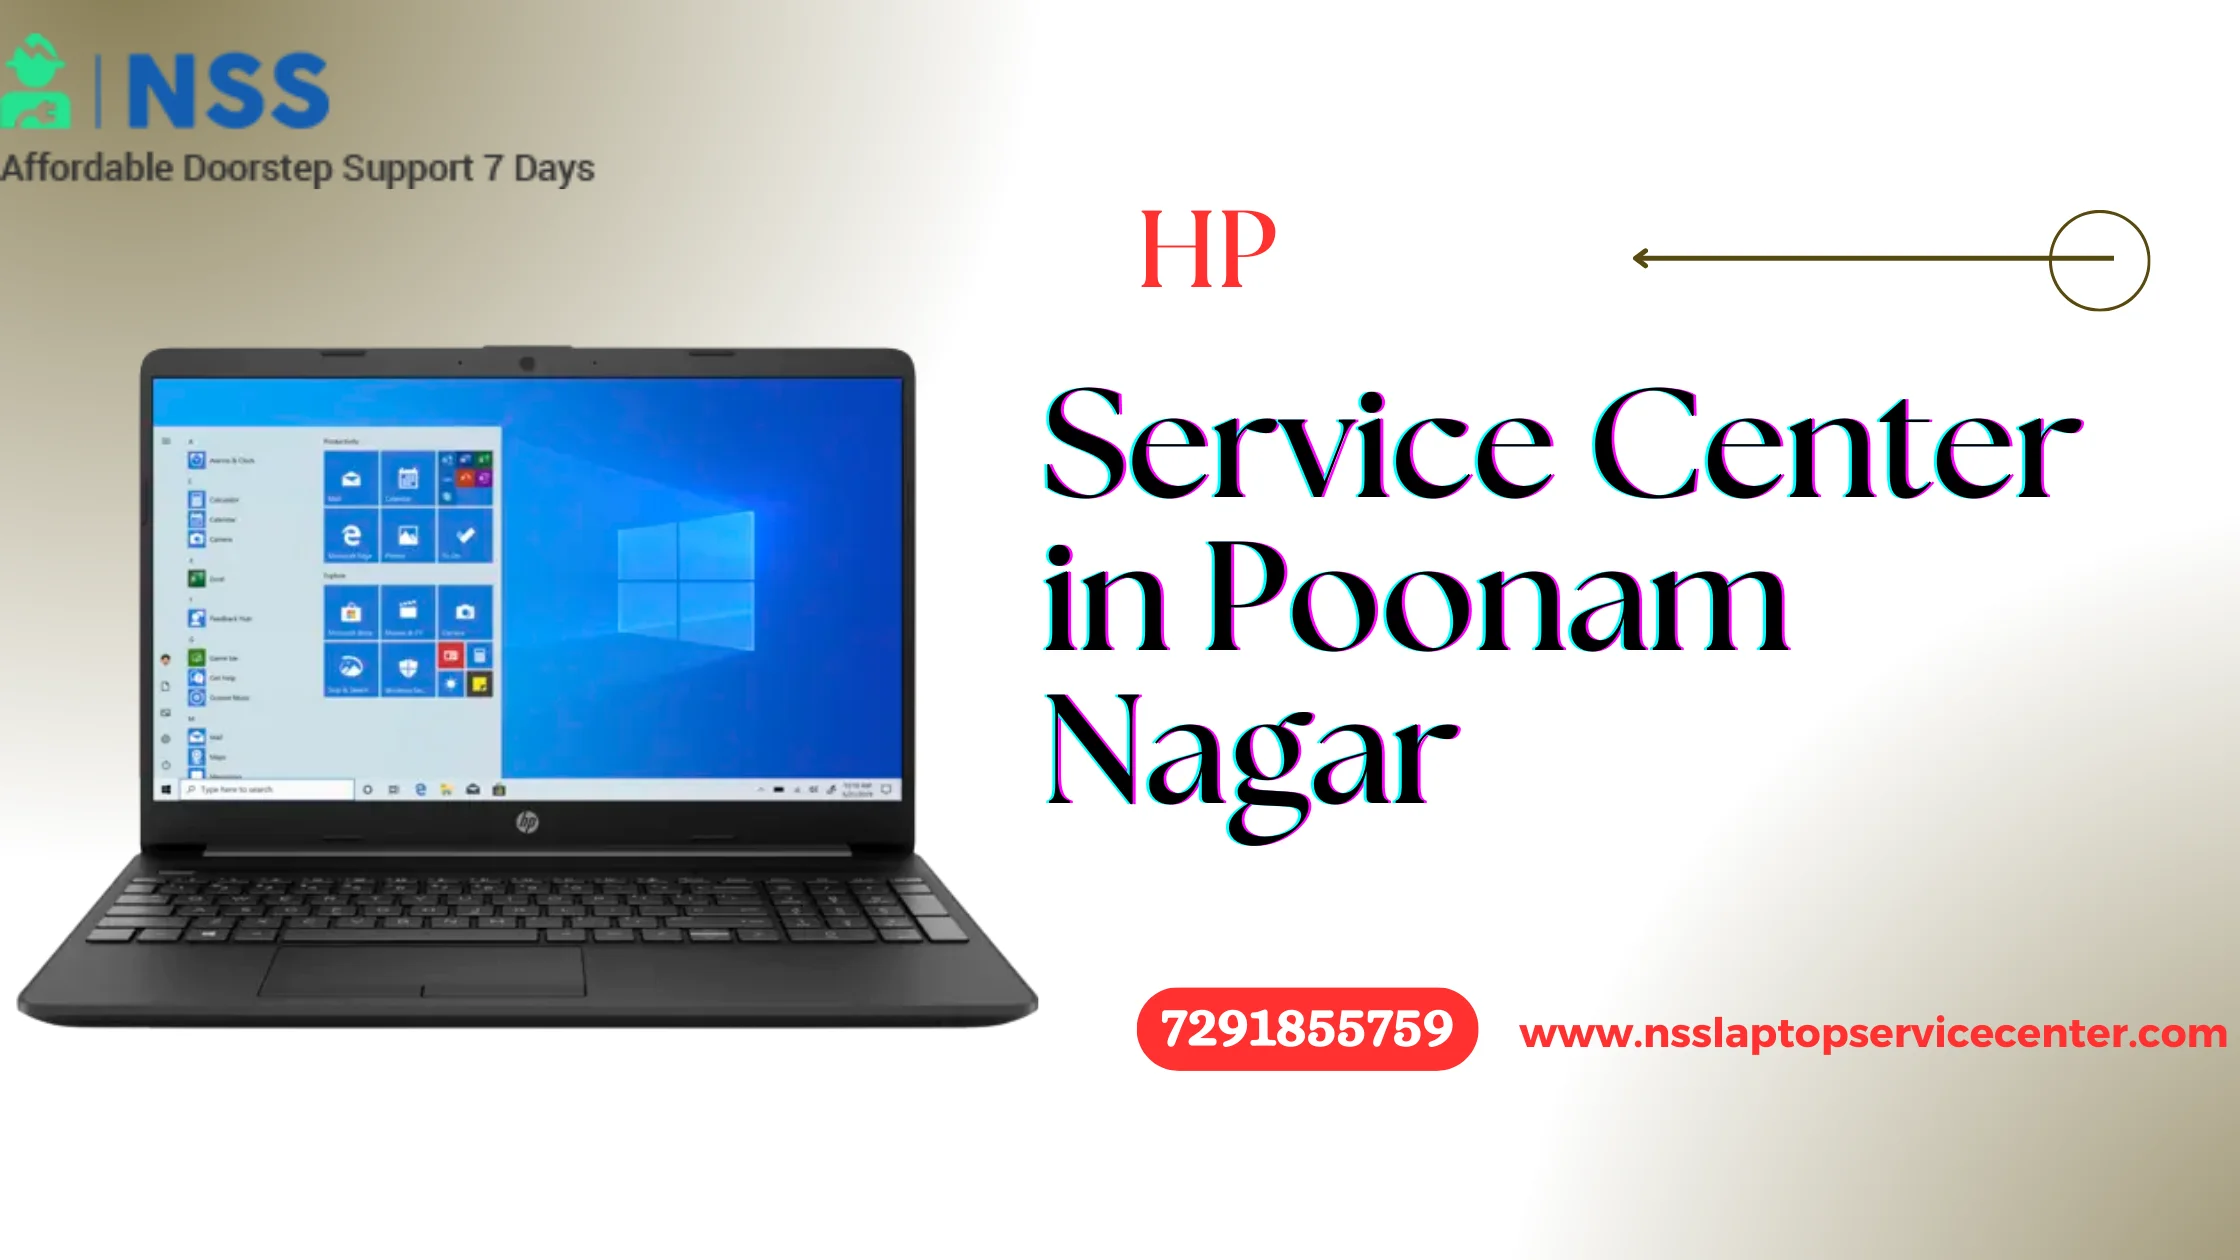 HP Service Center in Poonam Nagar Near Mumbai